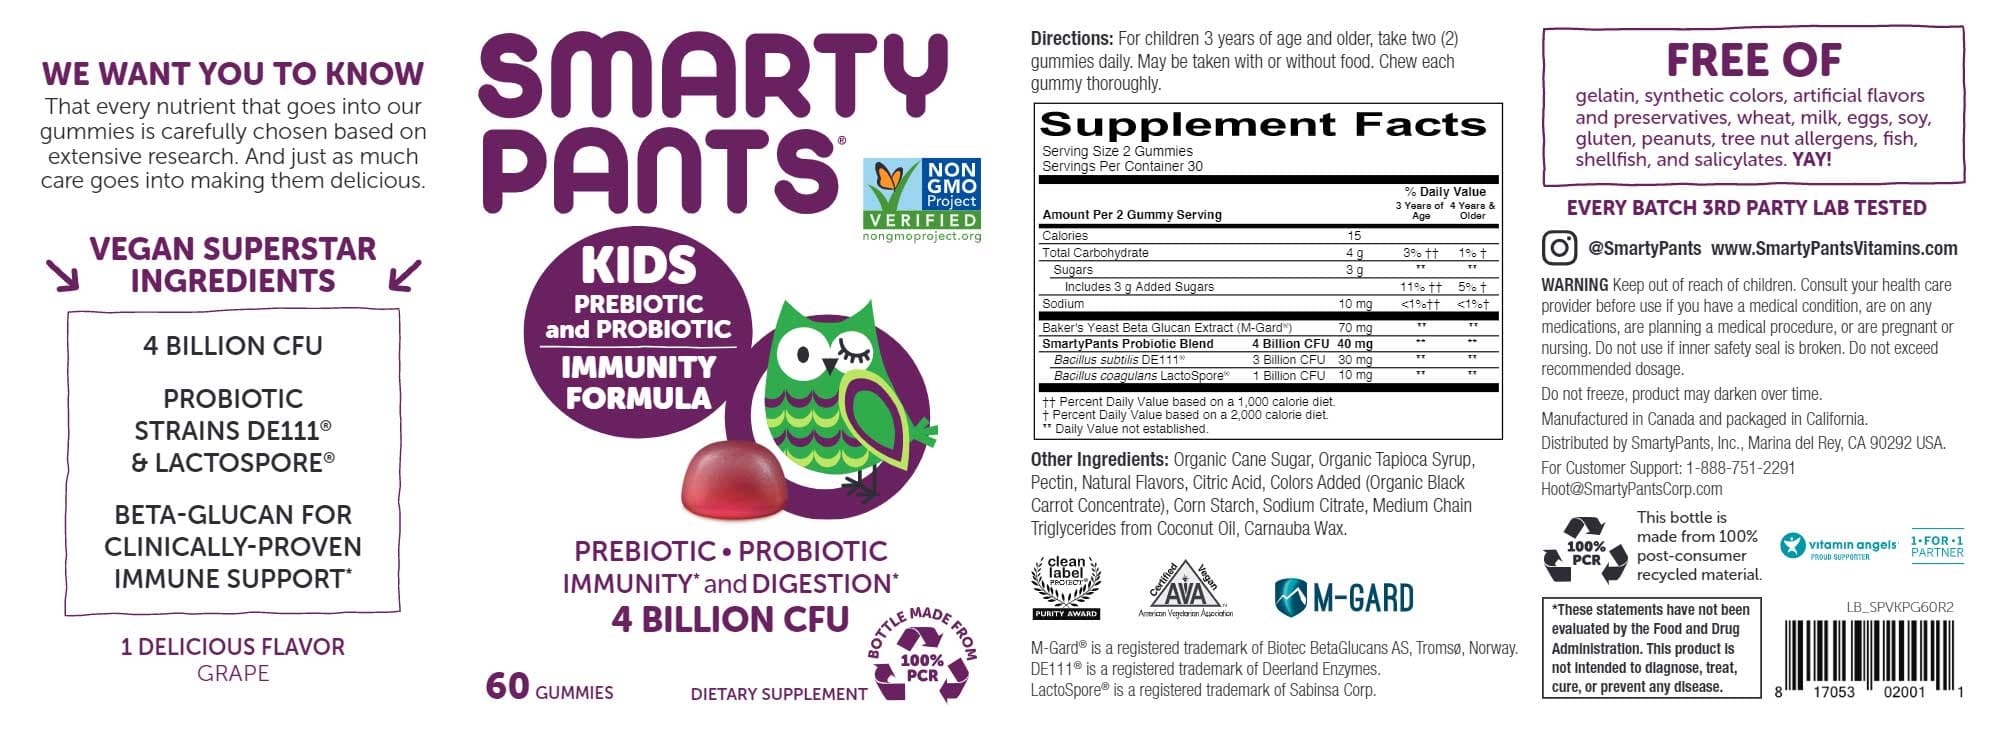 SmartyPants Kids Probiotic, Prebiotic Grape Ingredients